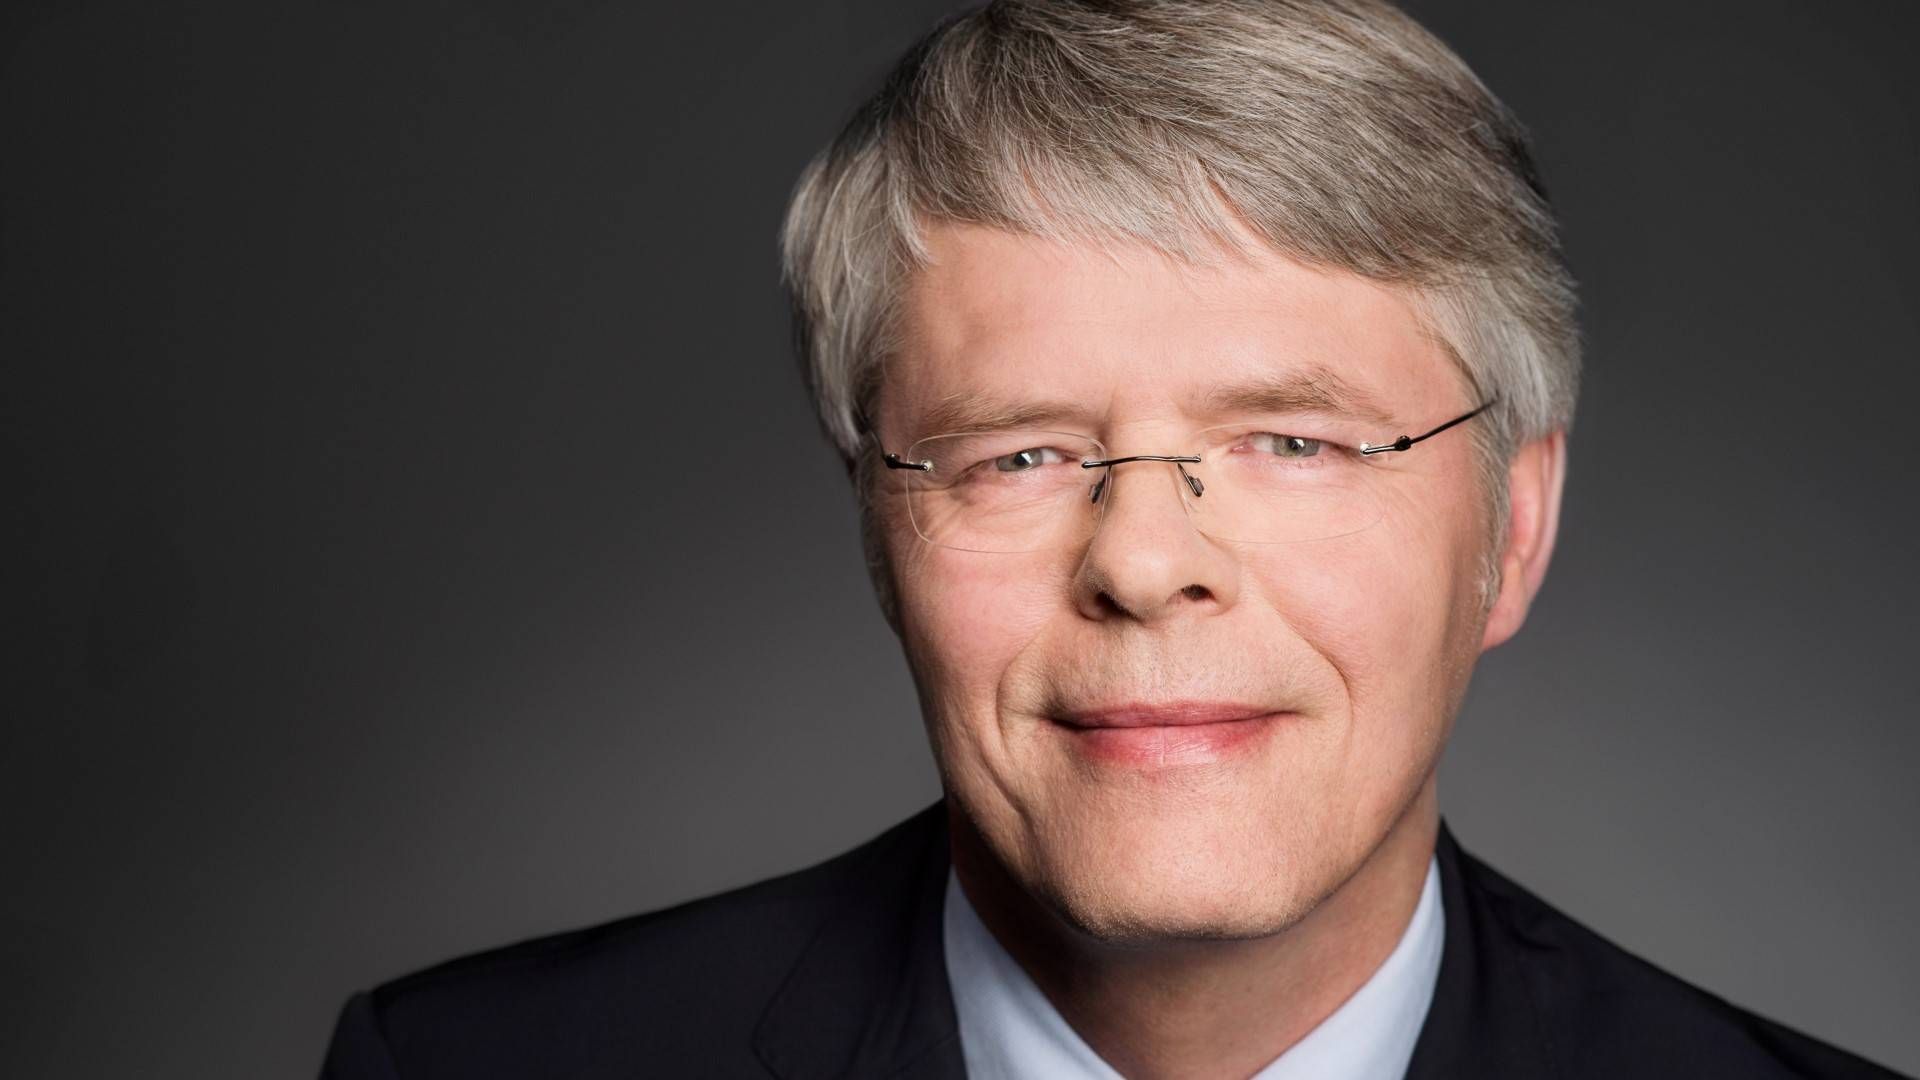 Jörg Schmiese, Direktor beim Bundesverband deutscher Banken | Foto: Bundesverband deutscher Banken